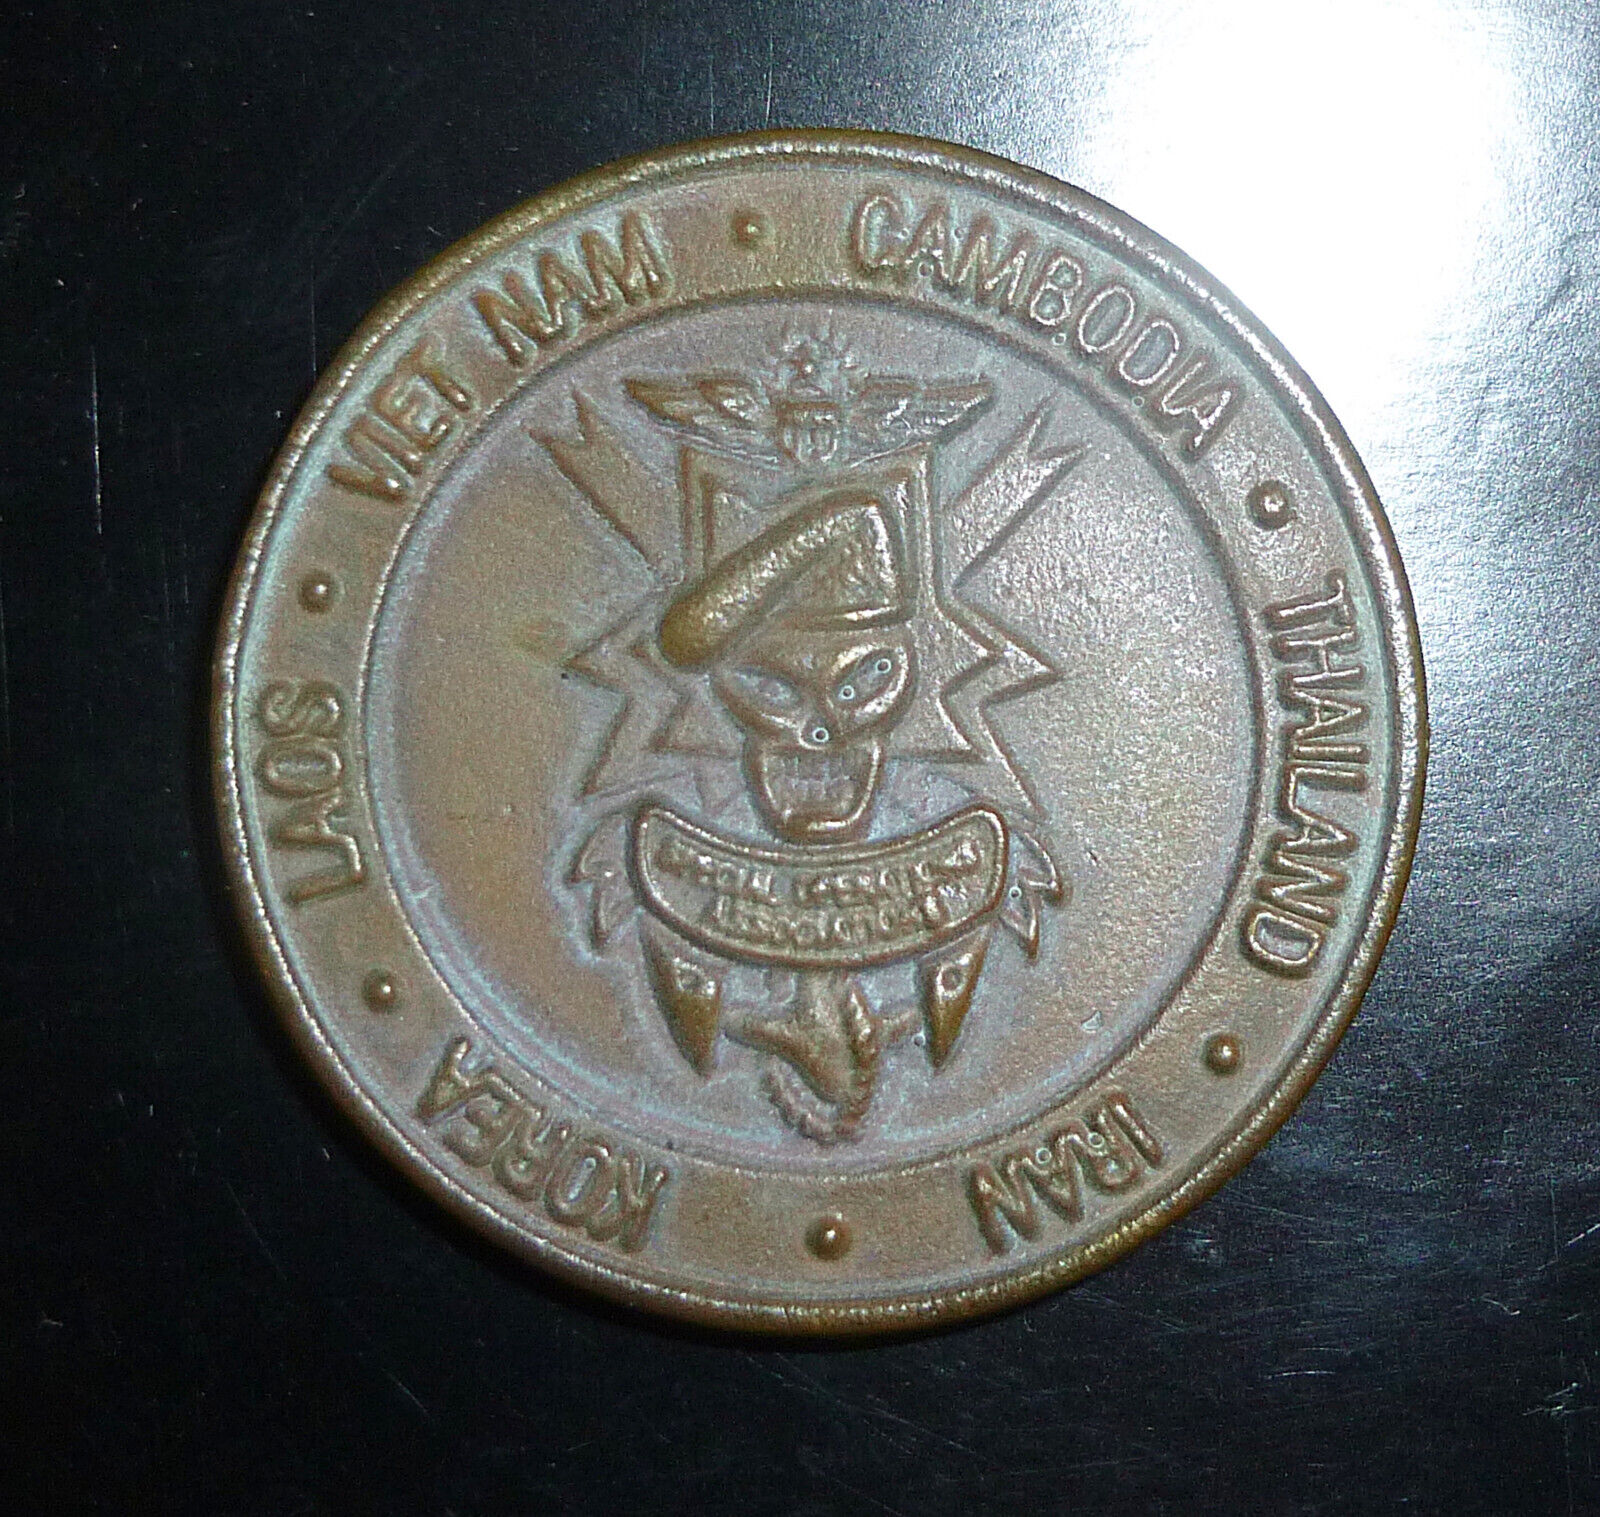 RARE - Un-Named Bronze Challenge Coin - US SPECIAL OPERATIONS - Vietnam War, C30